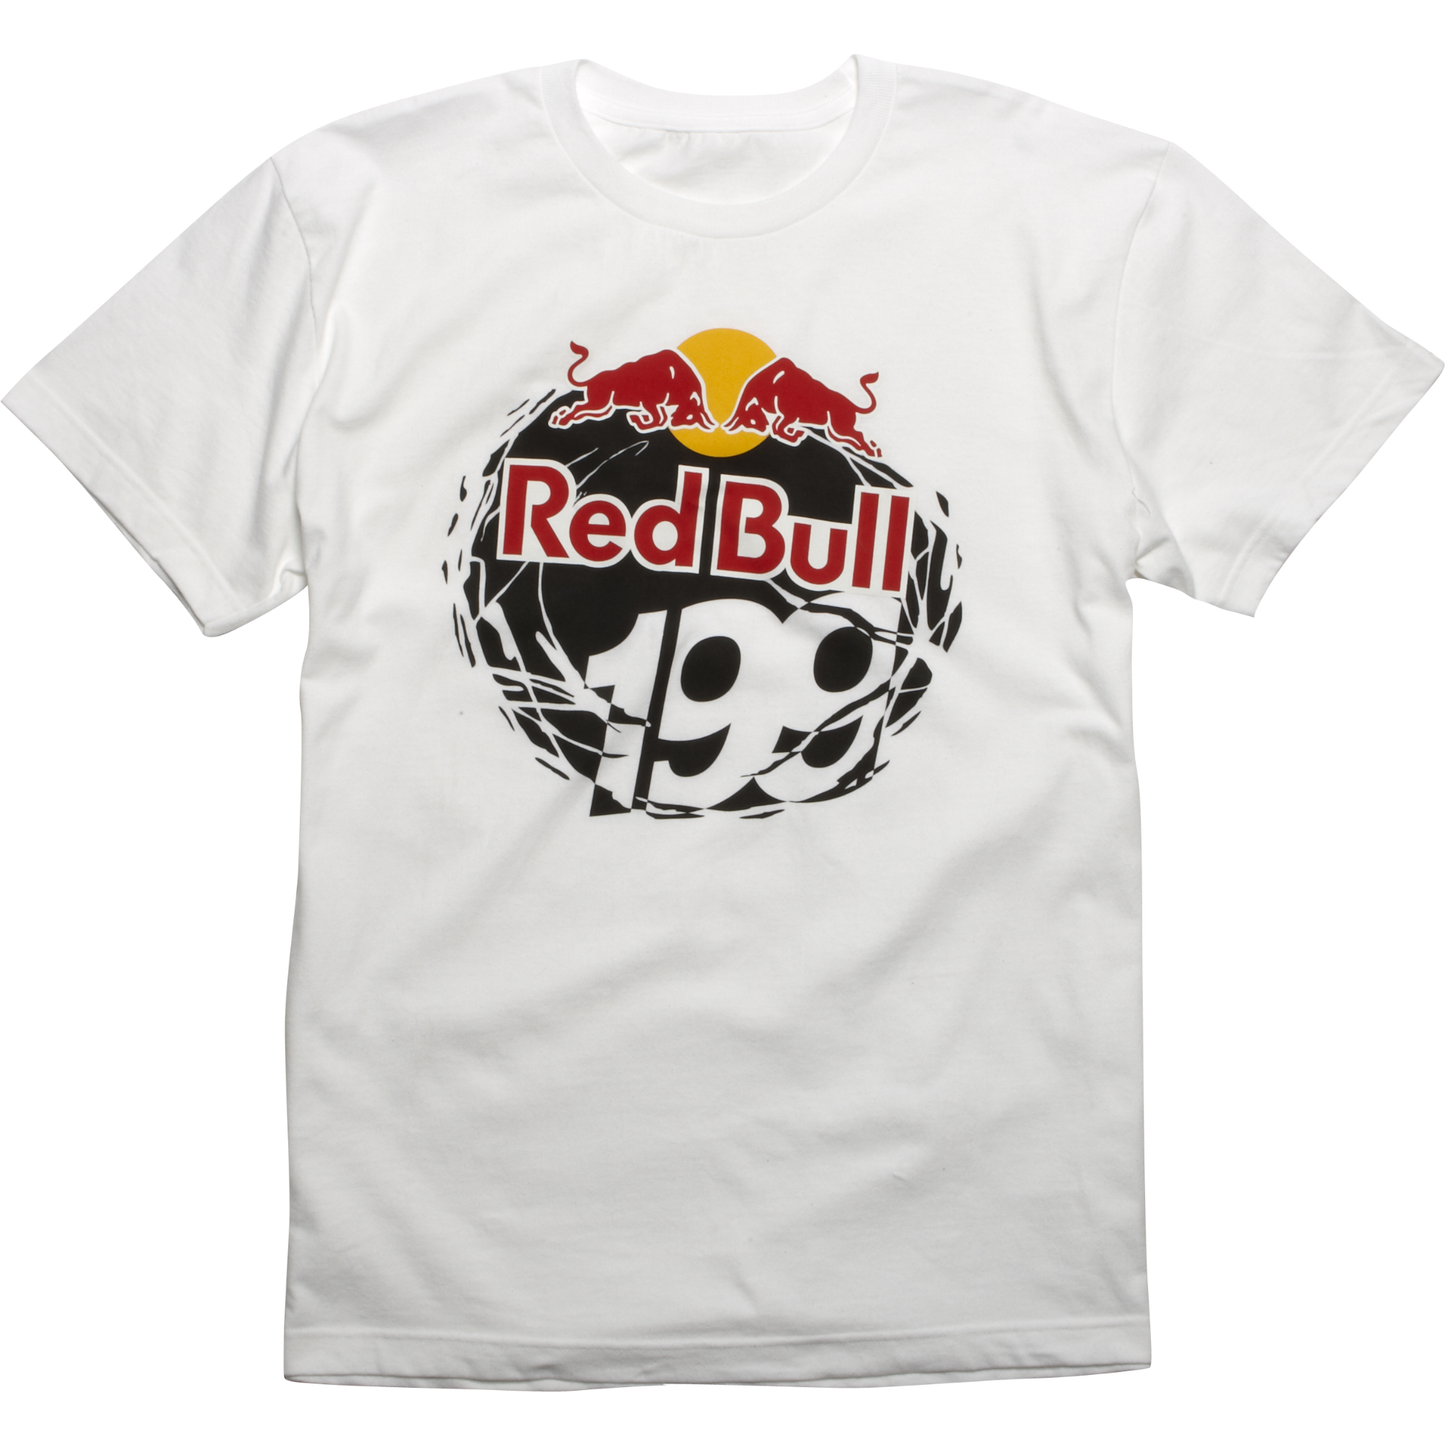 Fox Racing Red Bull 199 Tee White XLarge - ExtremeSupply.com